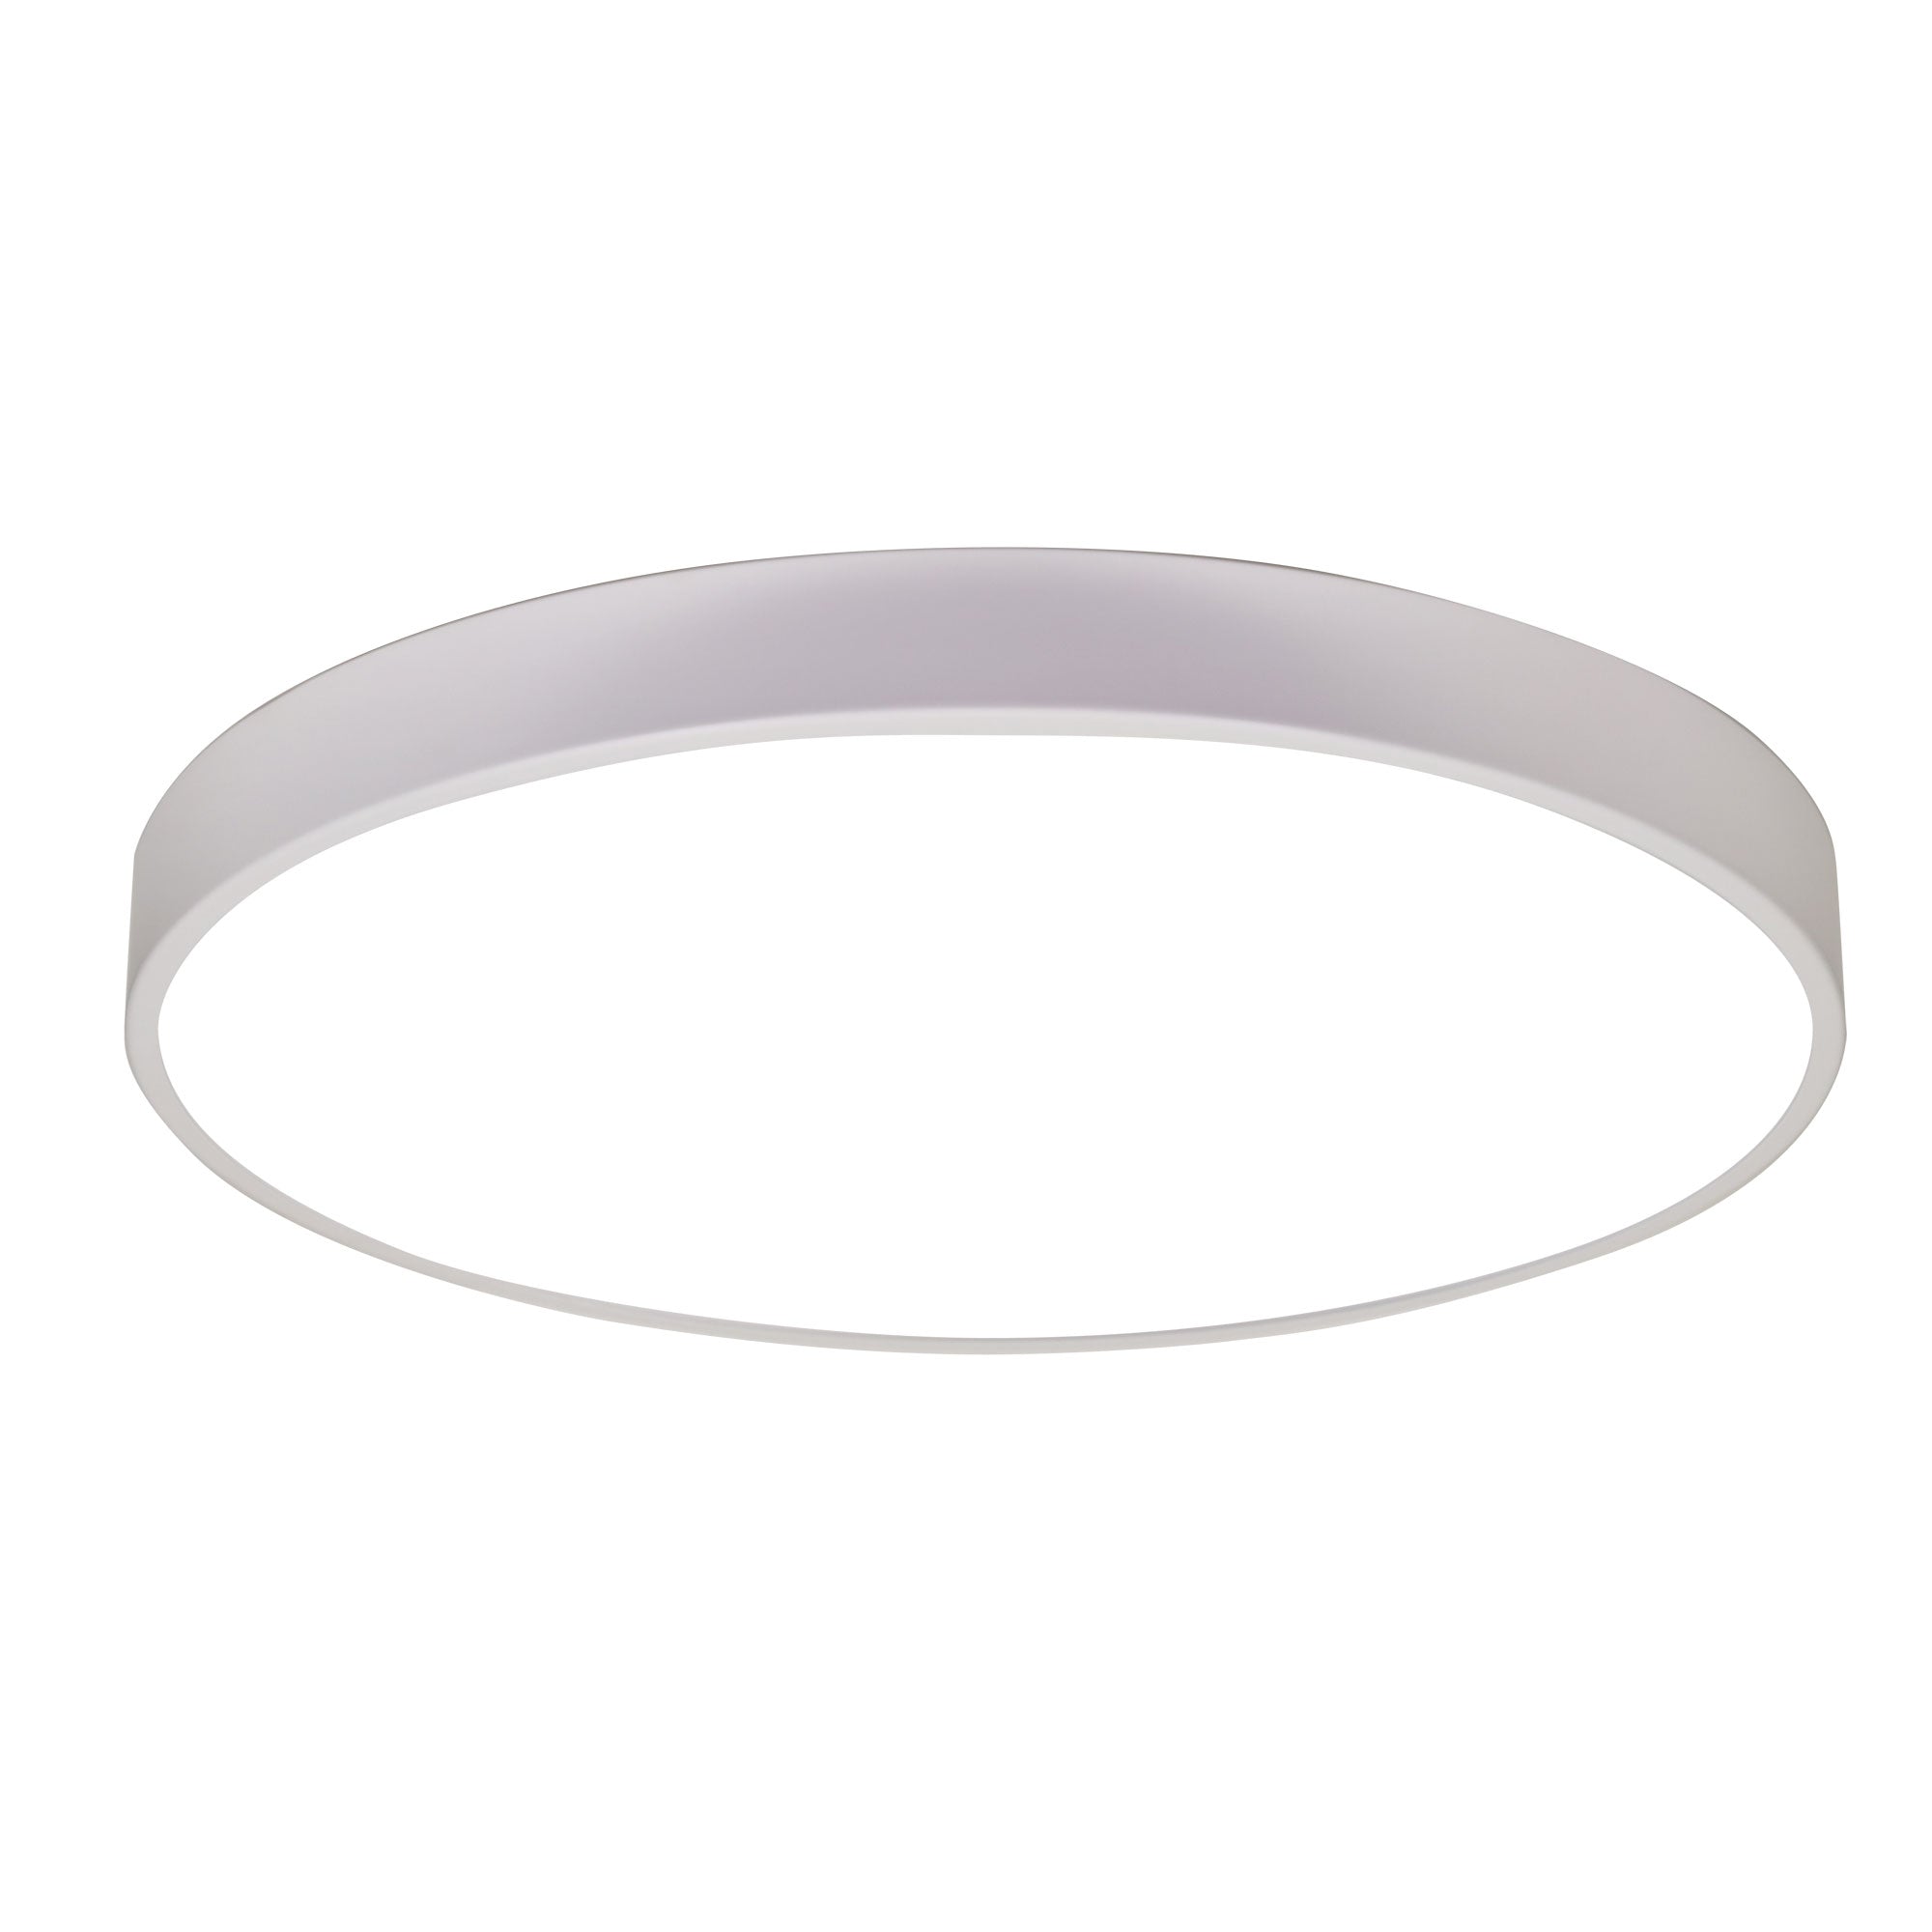 ORBIS LED Oyster Light 30W W500mm White TRI Colour - OL49861/50WH